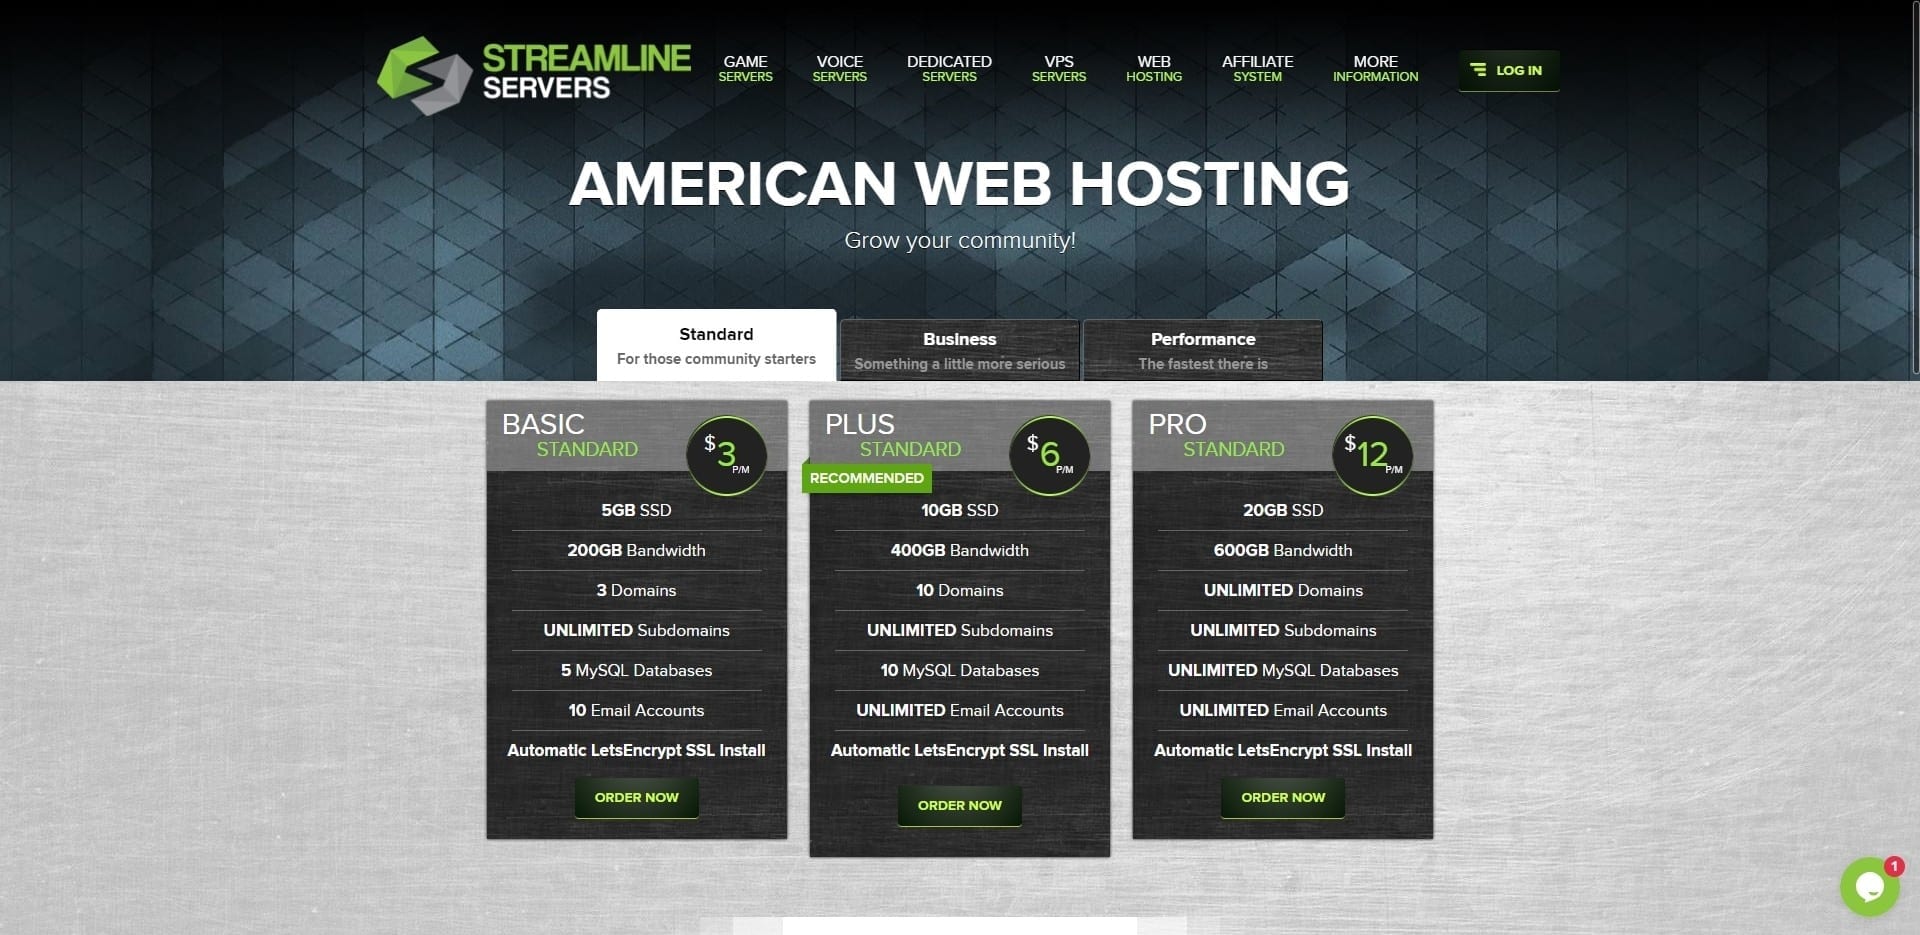 StreamLine Servers Web Hosting Overview